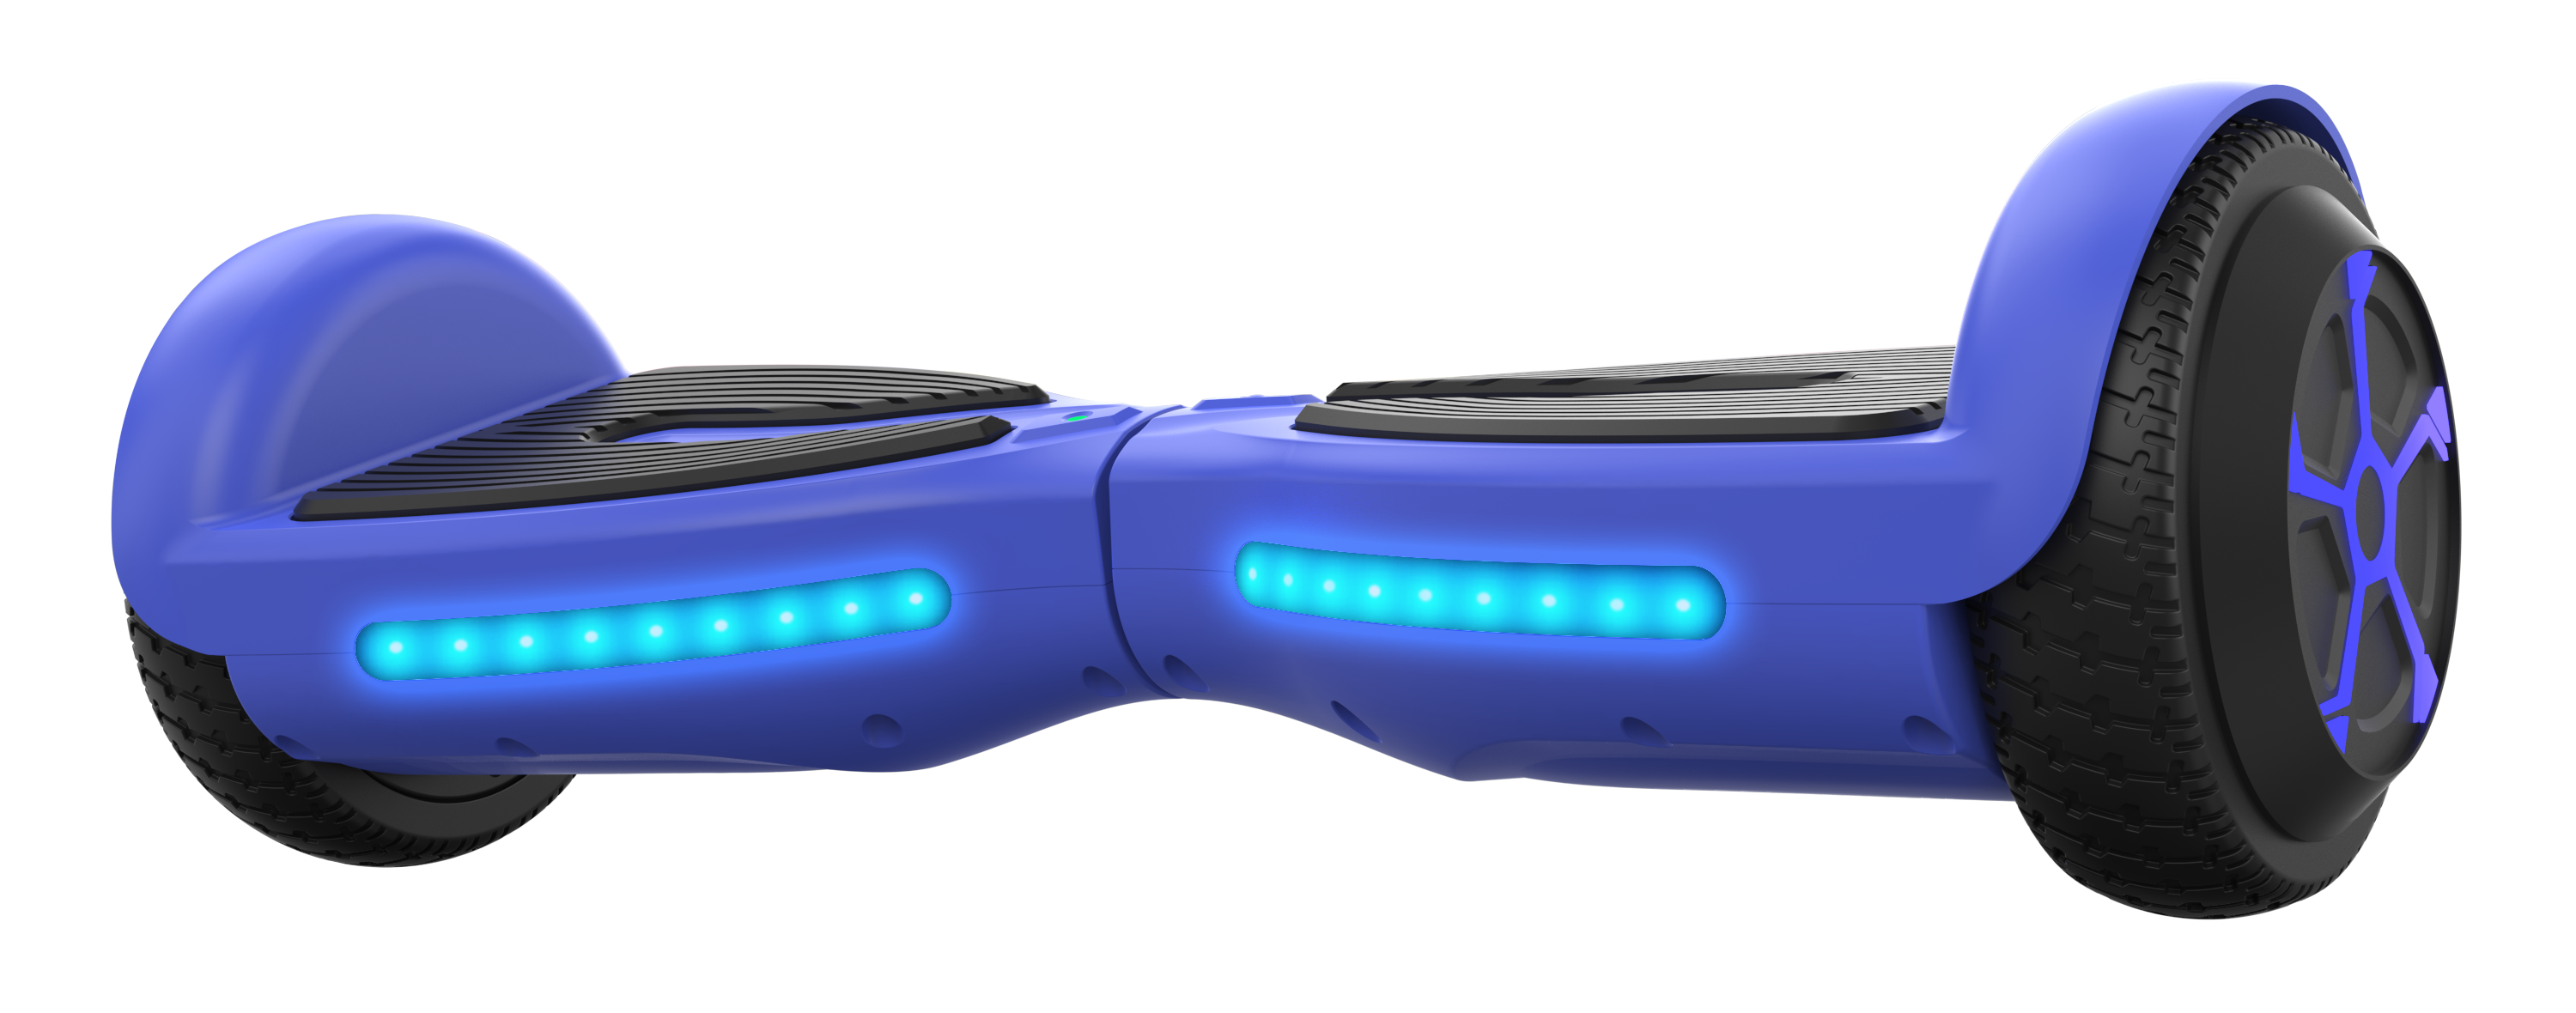 Voyager Hover Flow, Blue Hoverboard with Lights for Kids - image 1 of 11